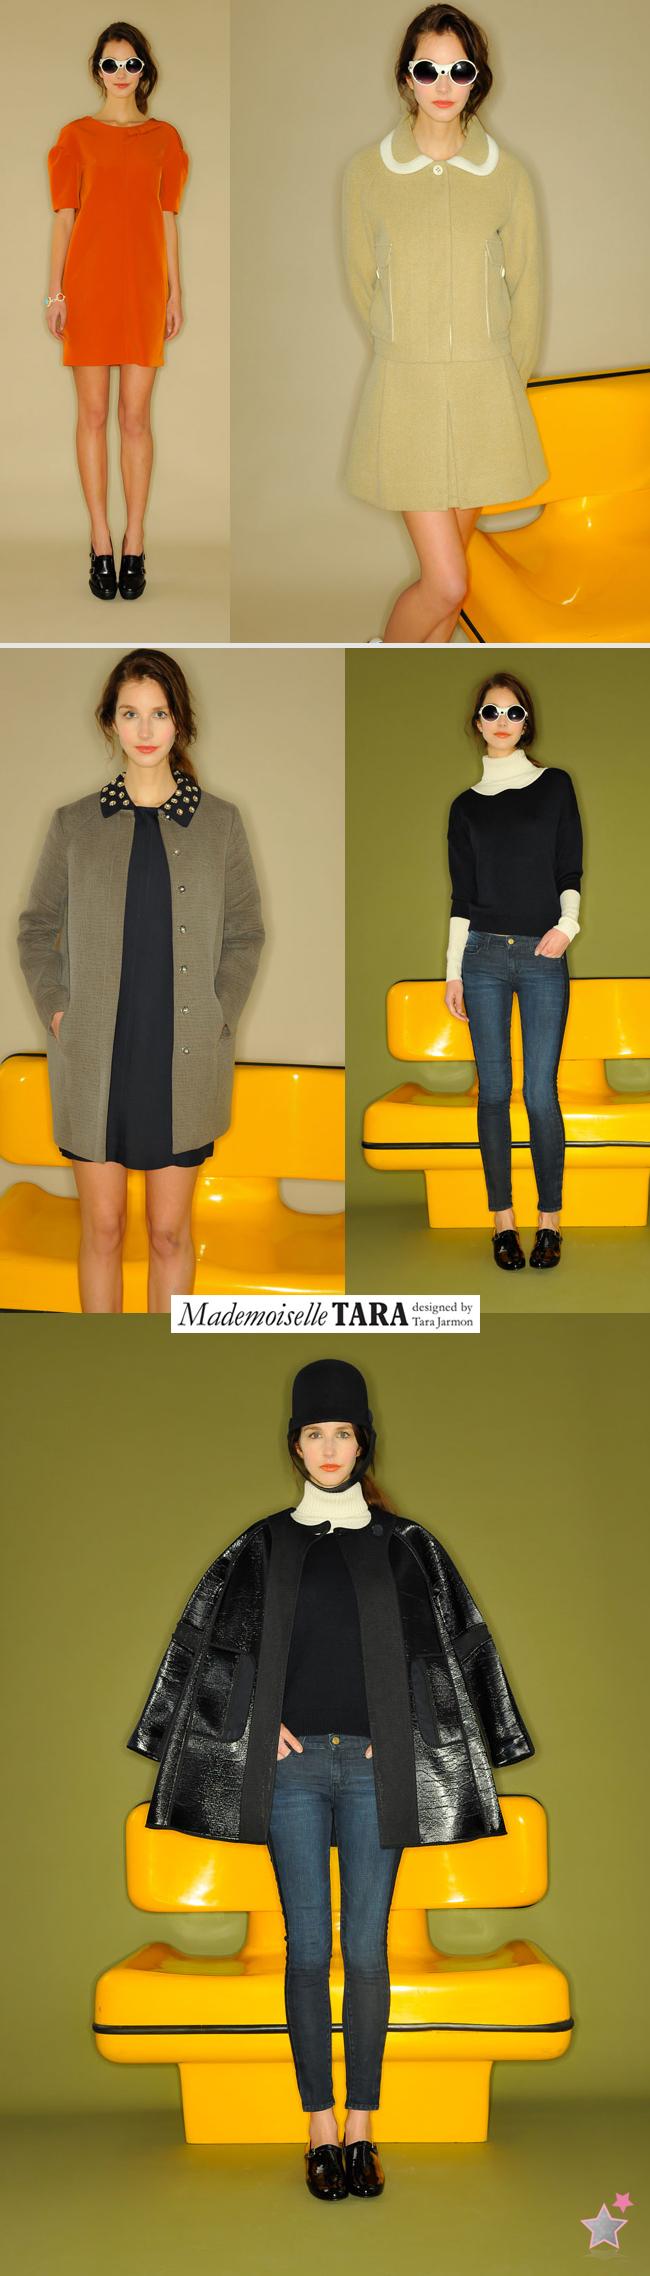 fashion brands... mademoiselle tara